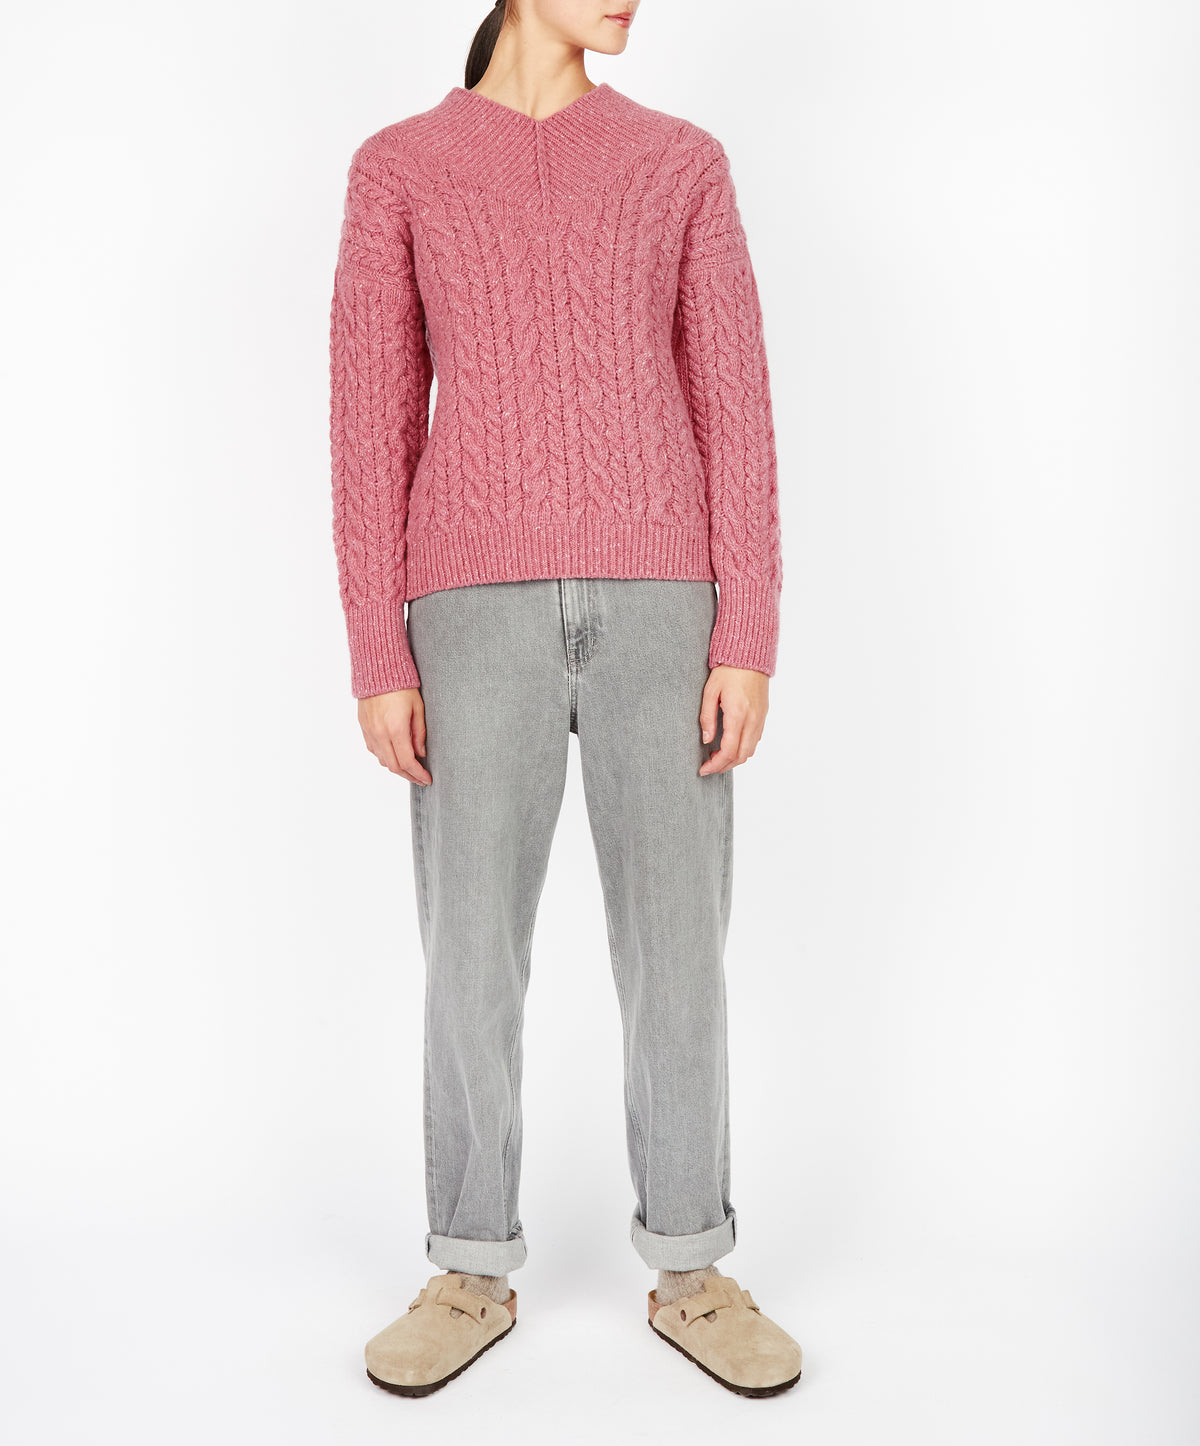 IrelandsEye Knitwear Mill Lane Cable V-neck Sweater Bubblegum pink